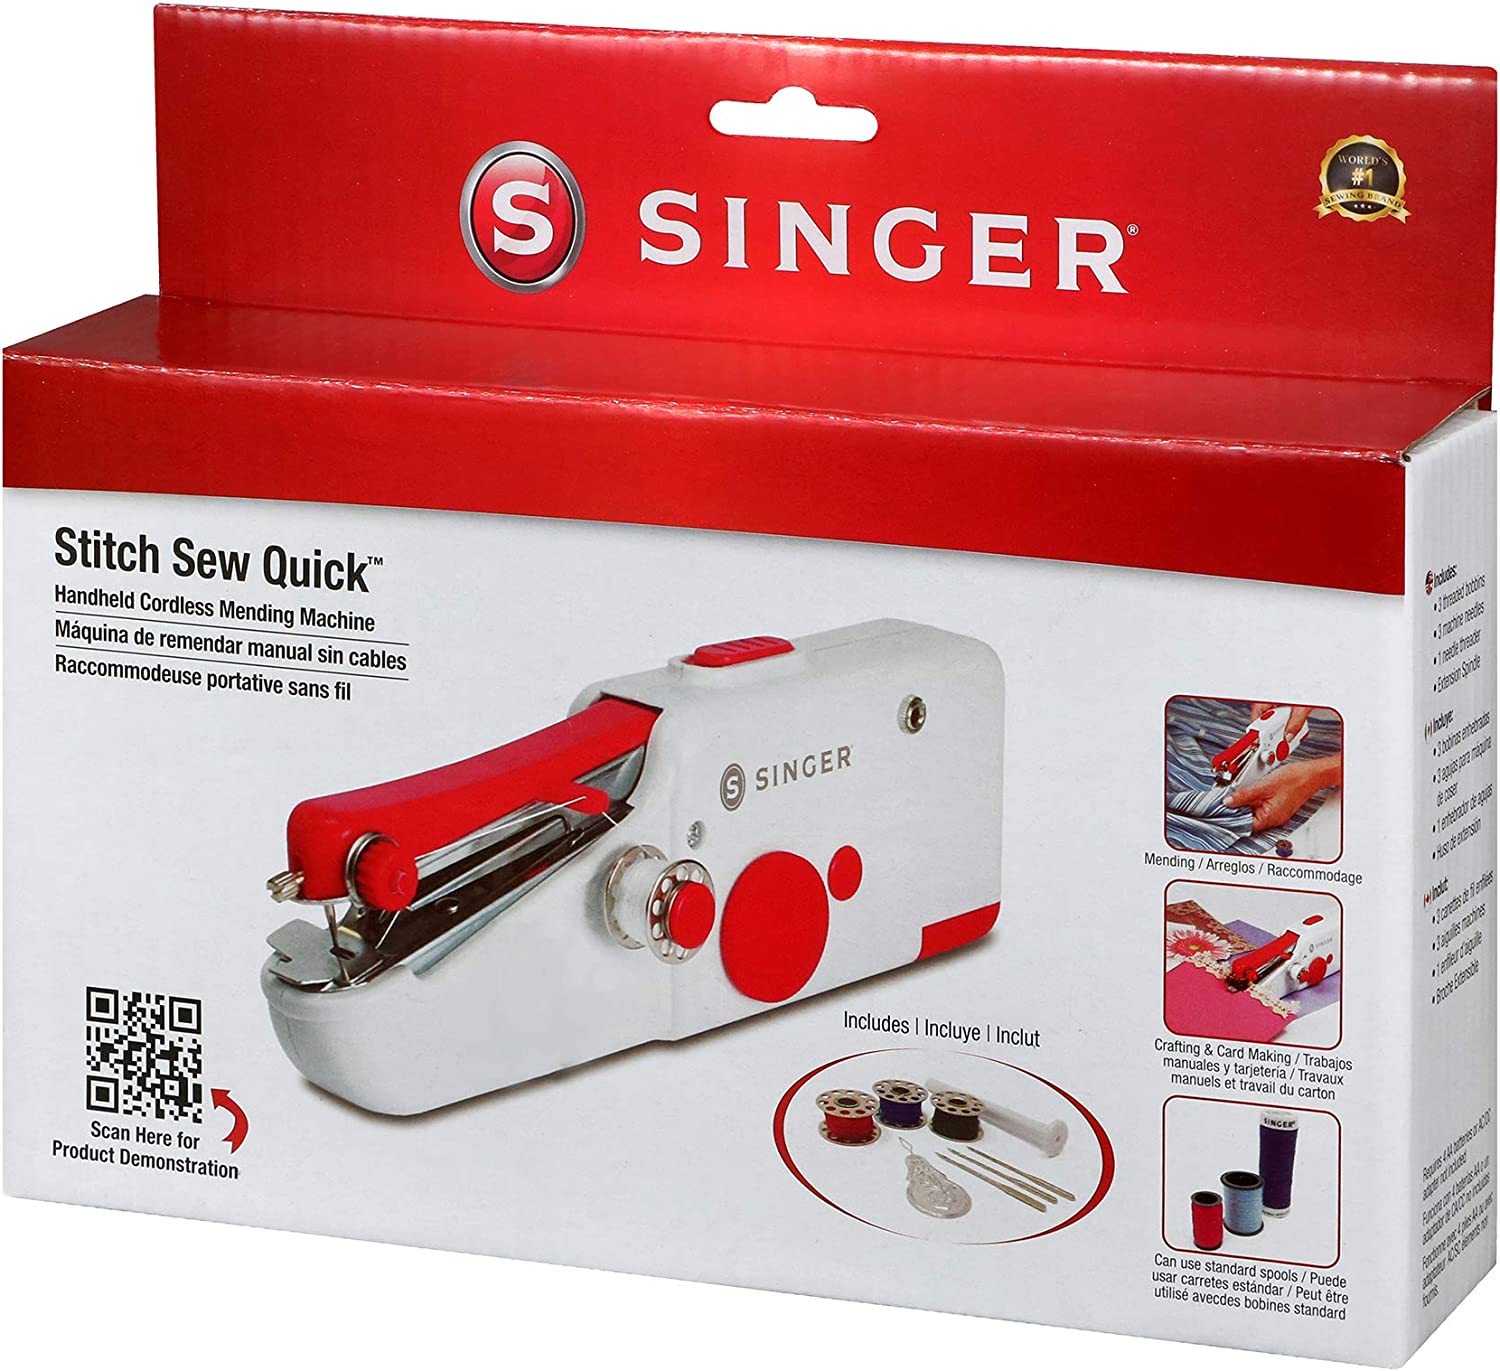 SINGER-01663-Stitch-Sew-Quick-Portable-Mending-Machine-1